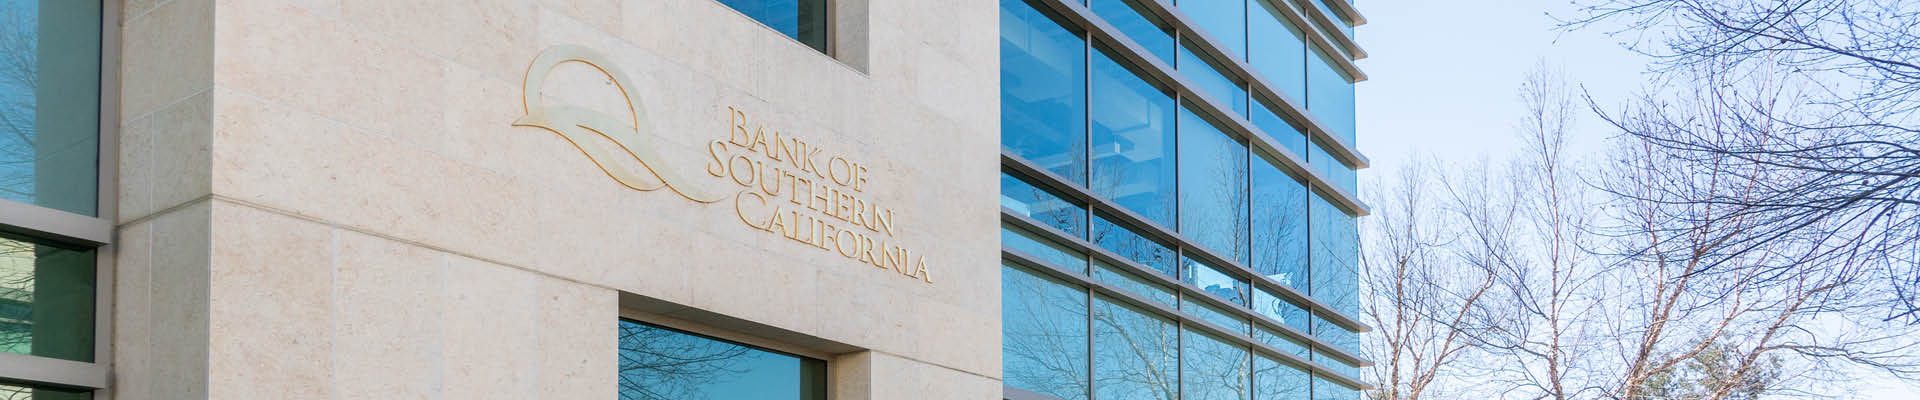 Bank of Southern California Del Mar Headquarters